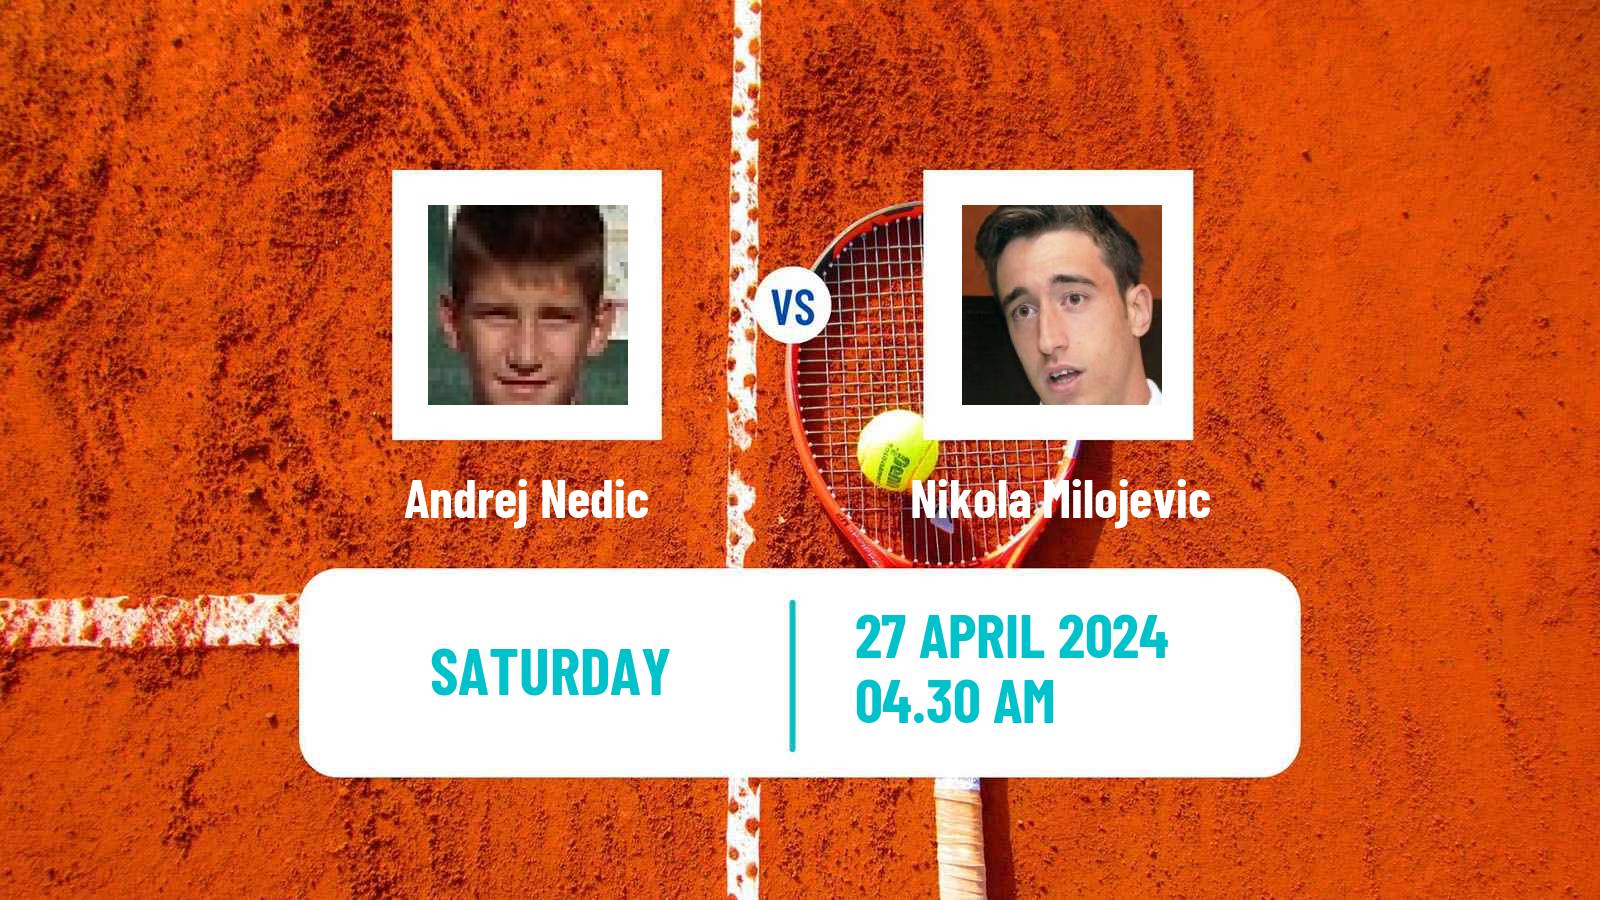 Tennis ITF M15 Kursumlijska Banja 2 Men Andrej Nedic - Nikola Milojevic